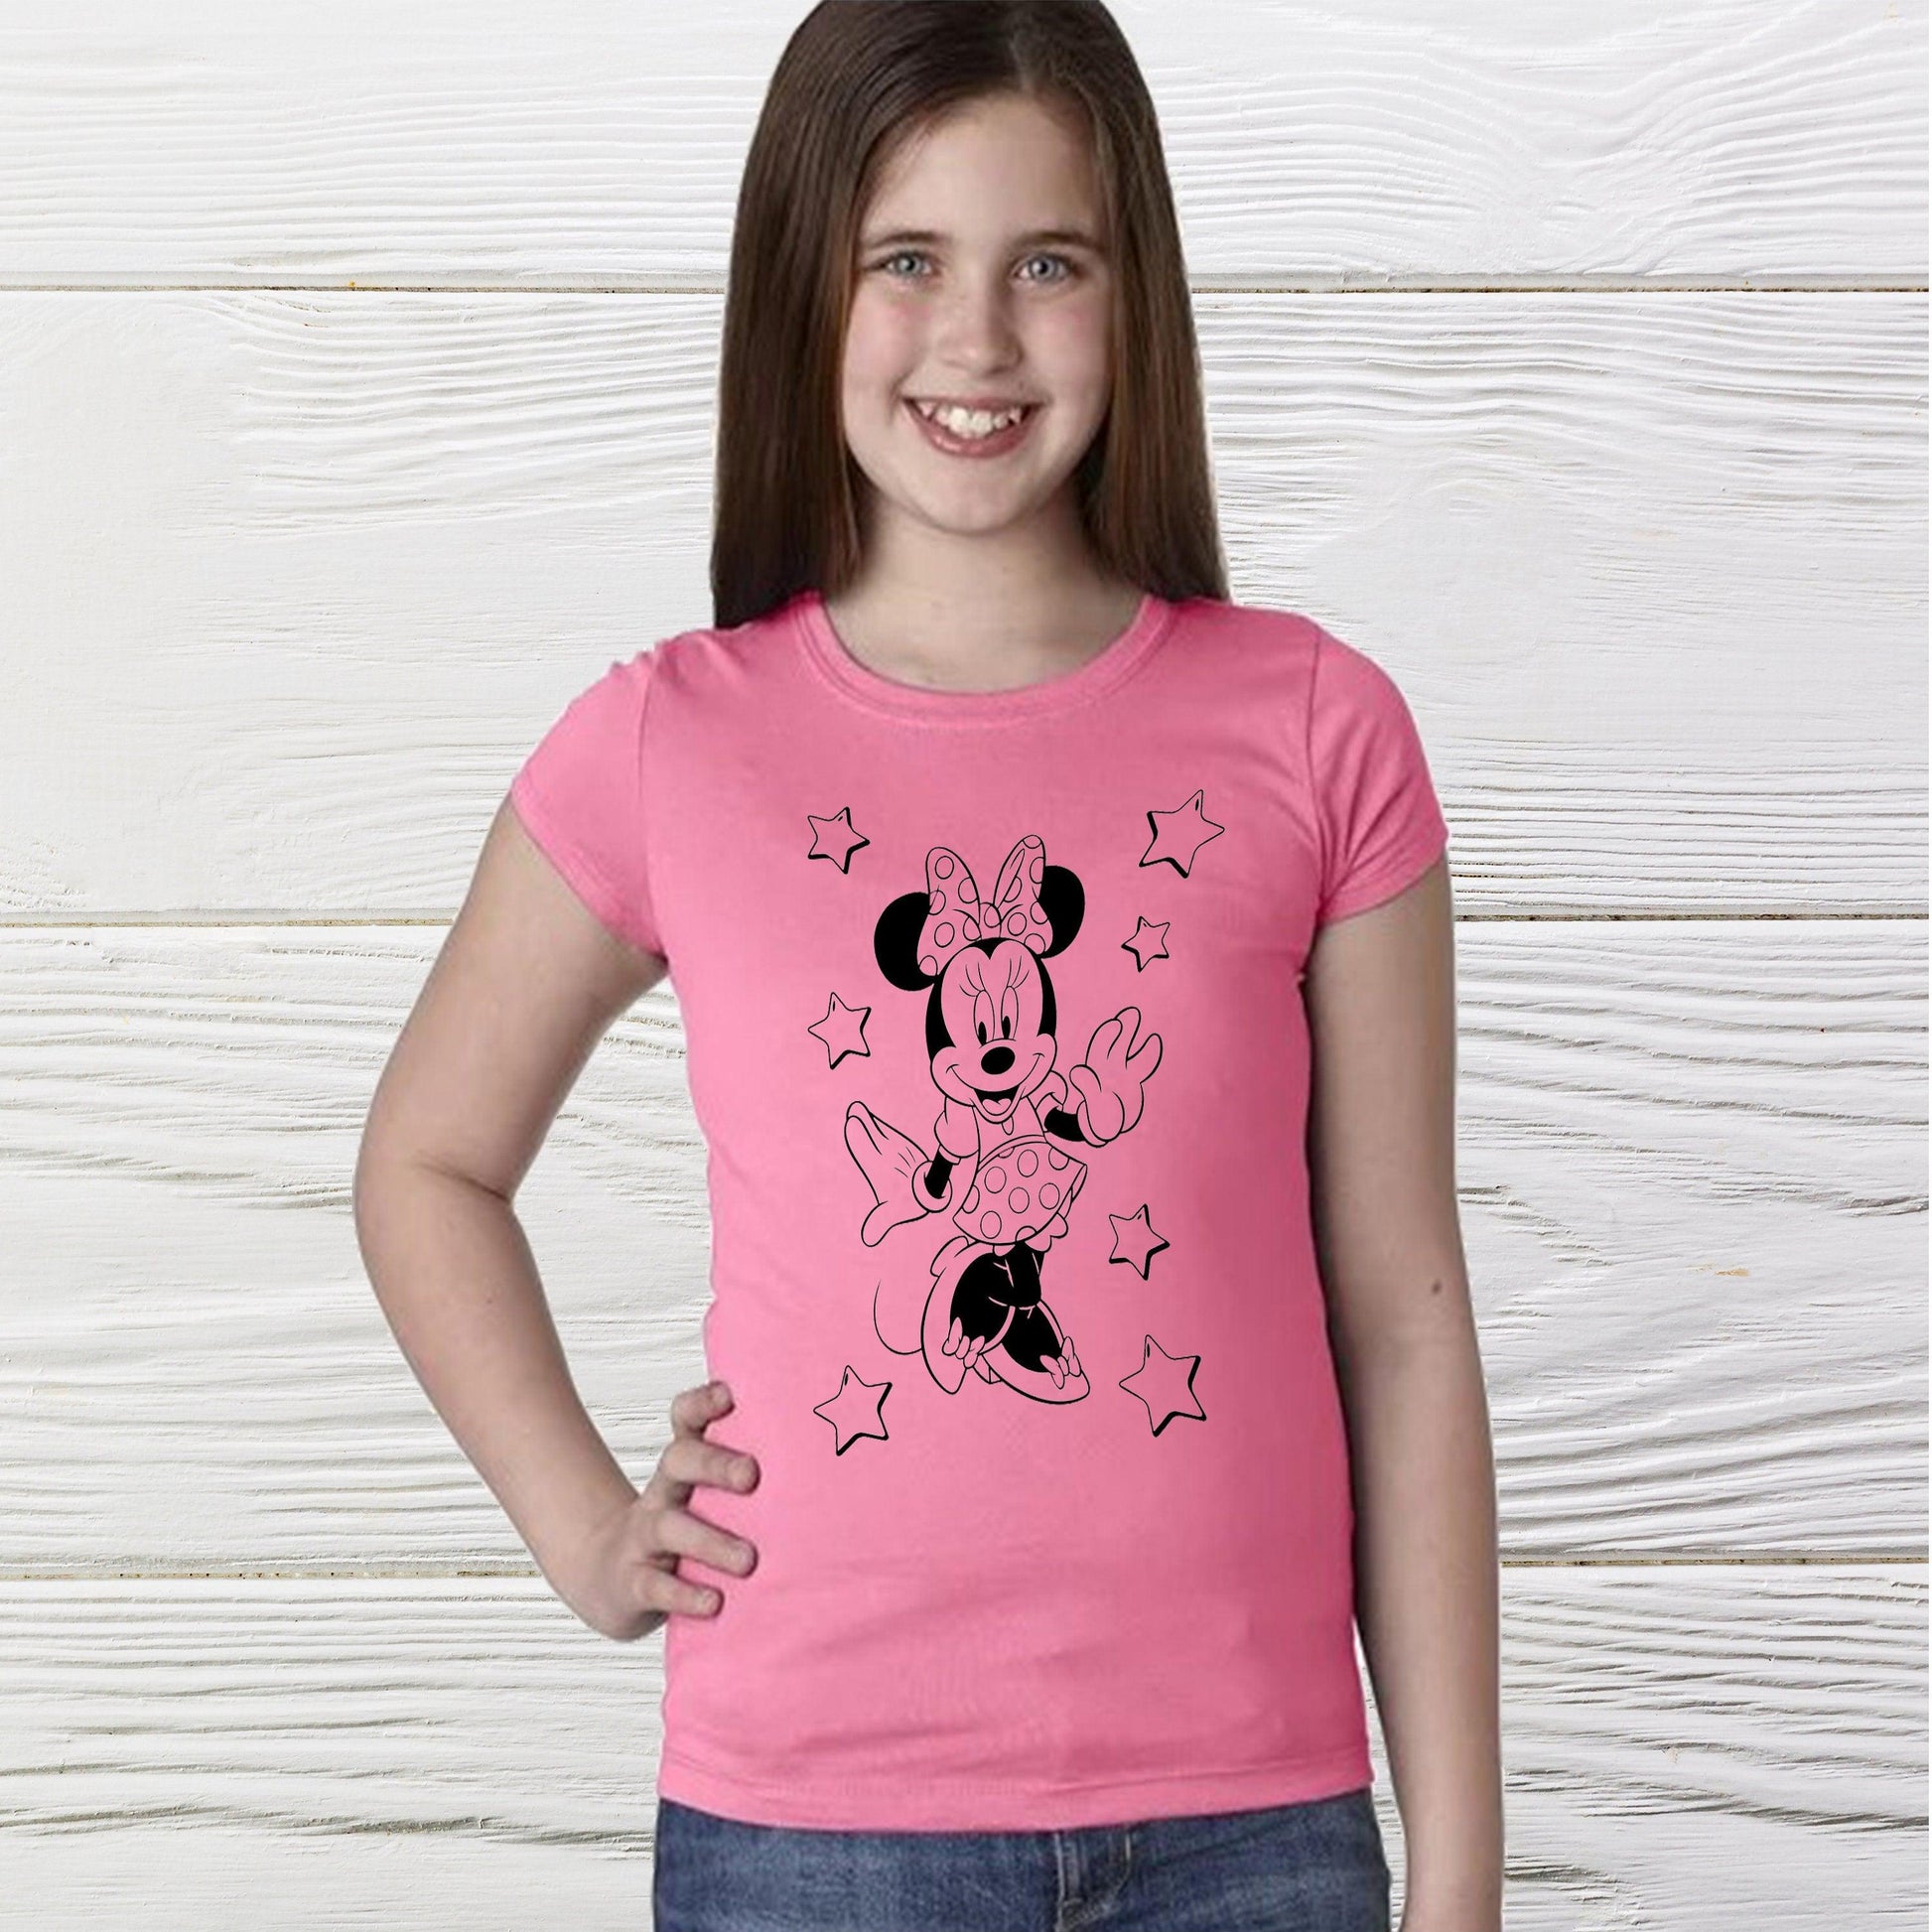 Minnie Mouse shirts